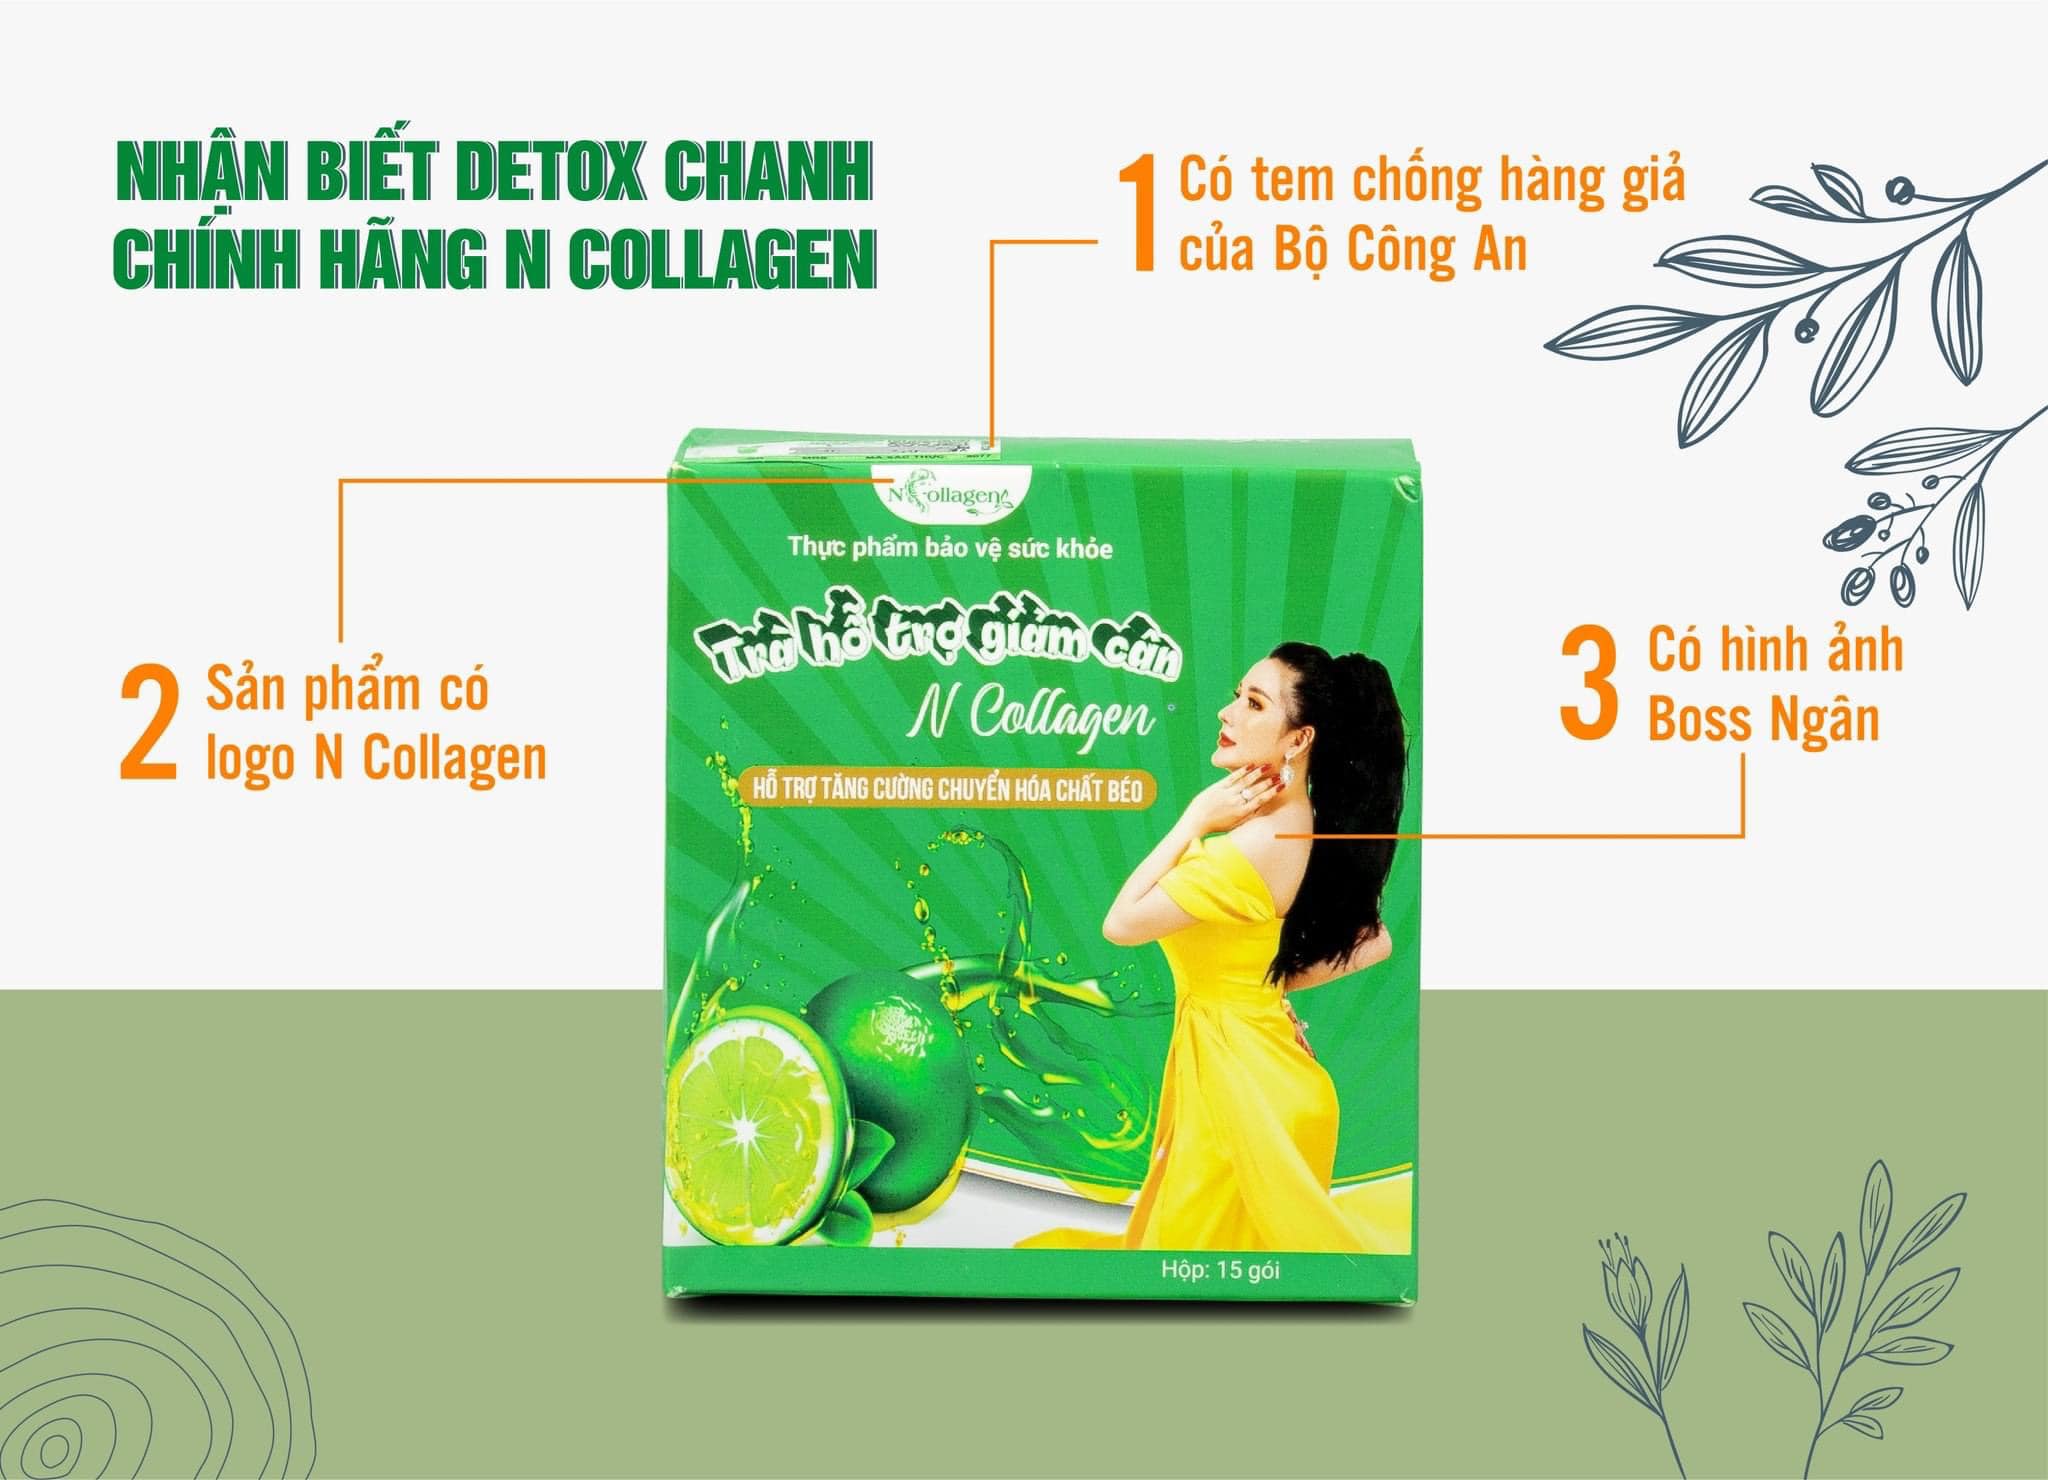 Detox Chanh Giảm Cân N Collagen (Tặng Detox)